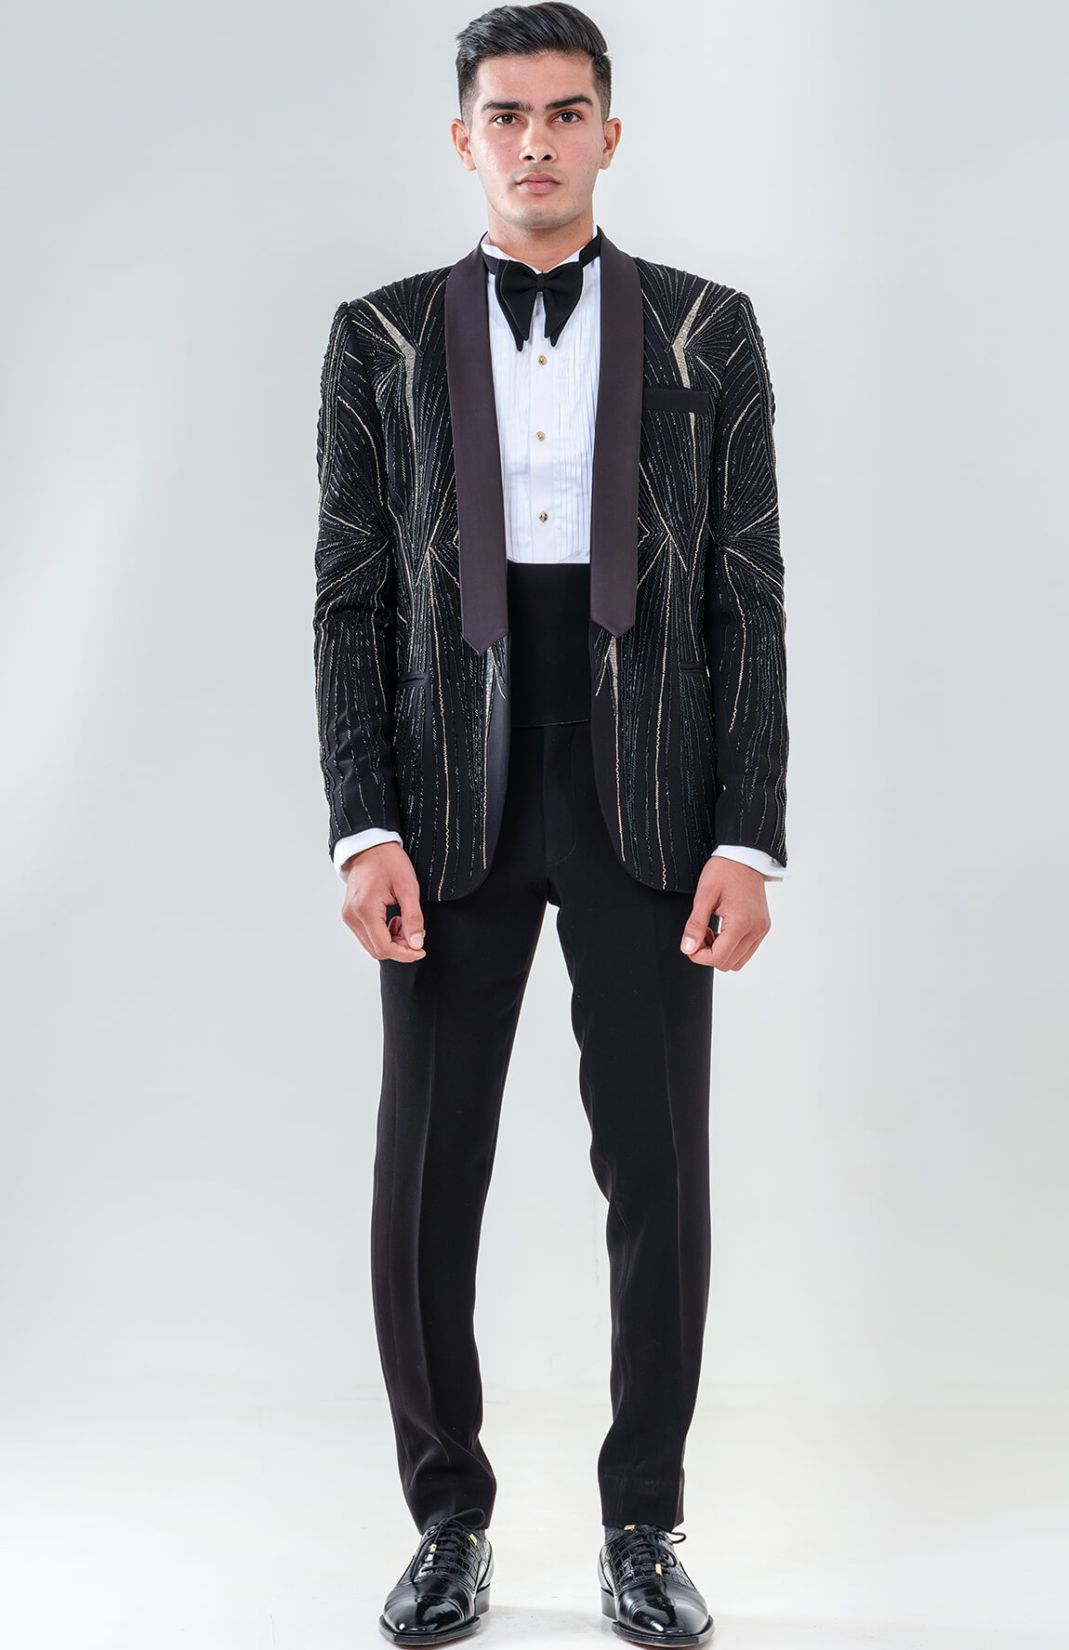 Silver & Black Cutdana Embellished  Tuxedo With Shawl Lapel